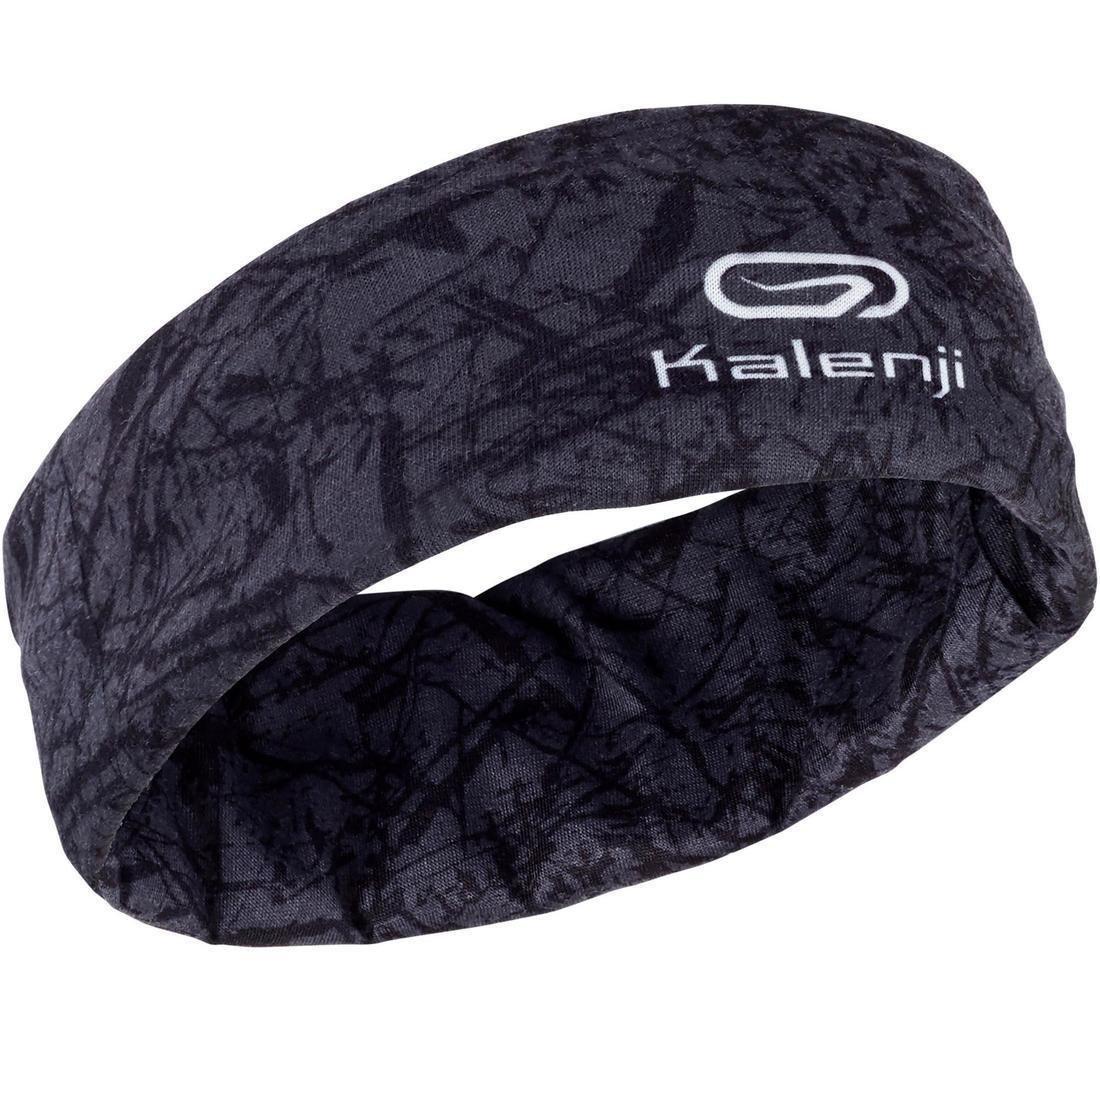 KIPRUN - Multi-Purpose Lightweight Headband, Khaki Brown